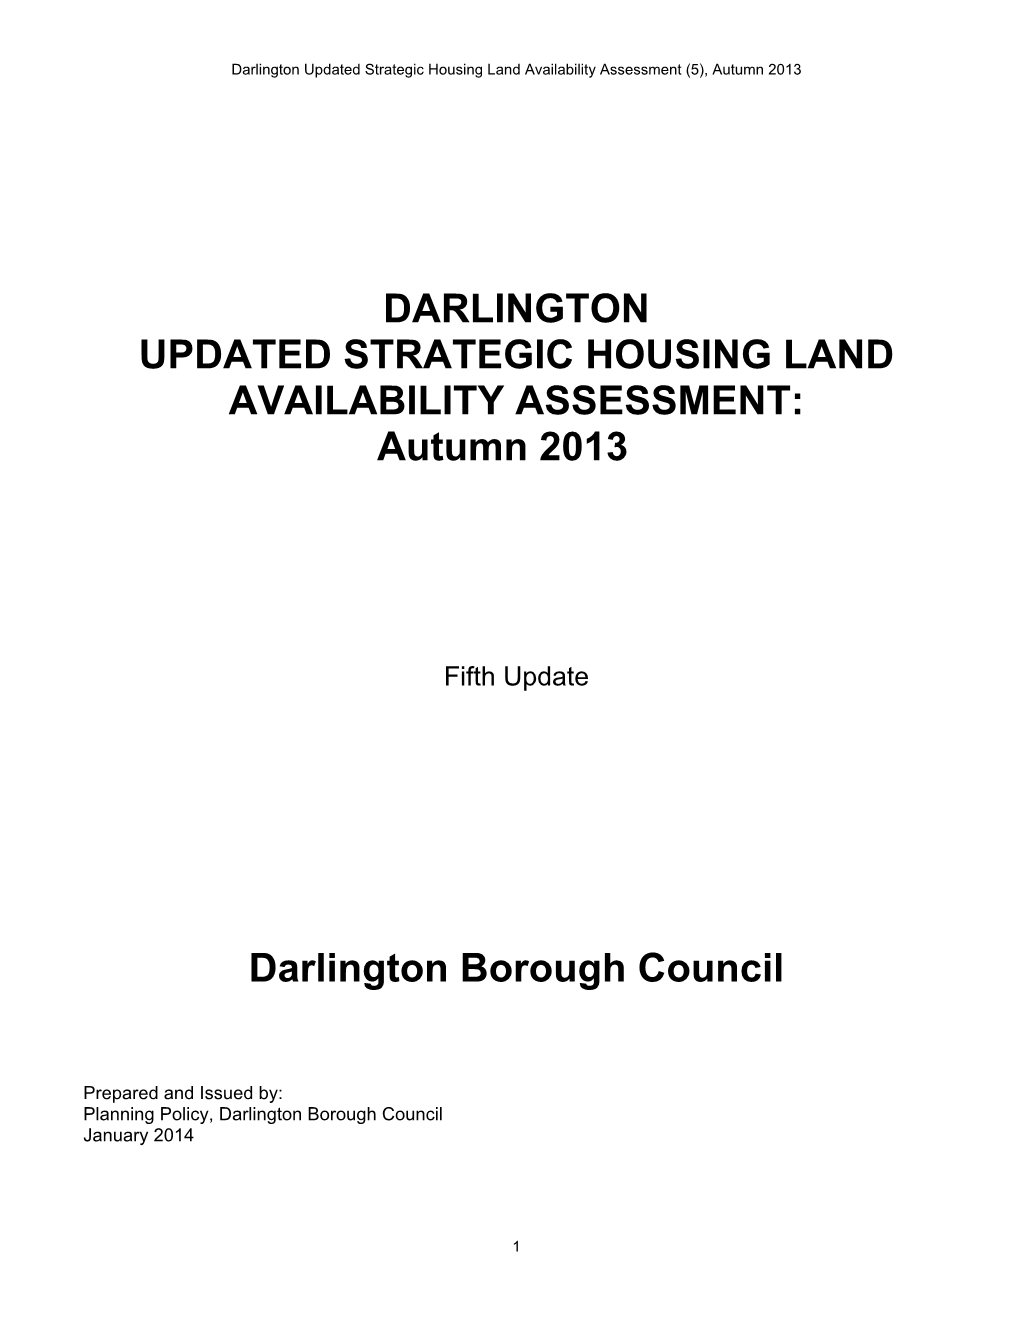 Darlington Strategic Housing Land Availability Assessment